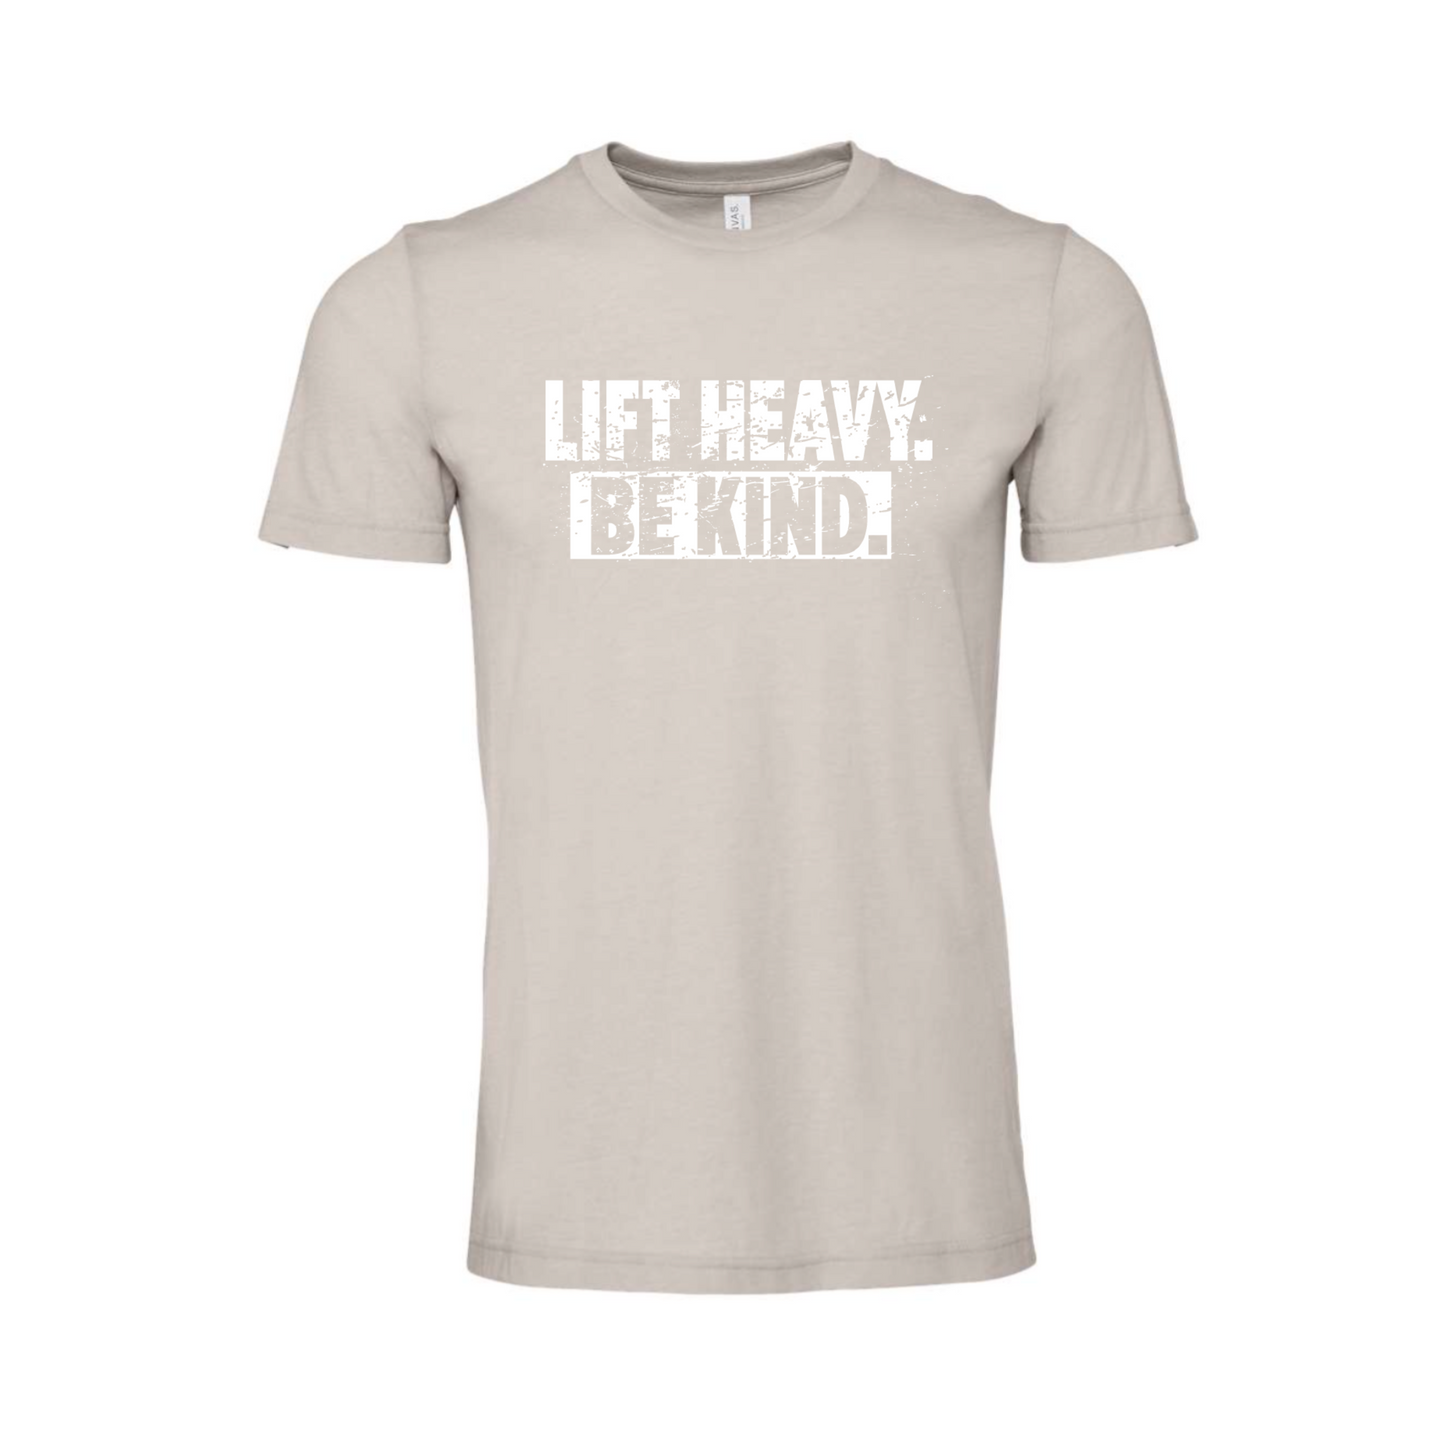 Lift Heavy Be Kind - Unisex Tee